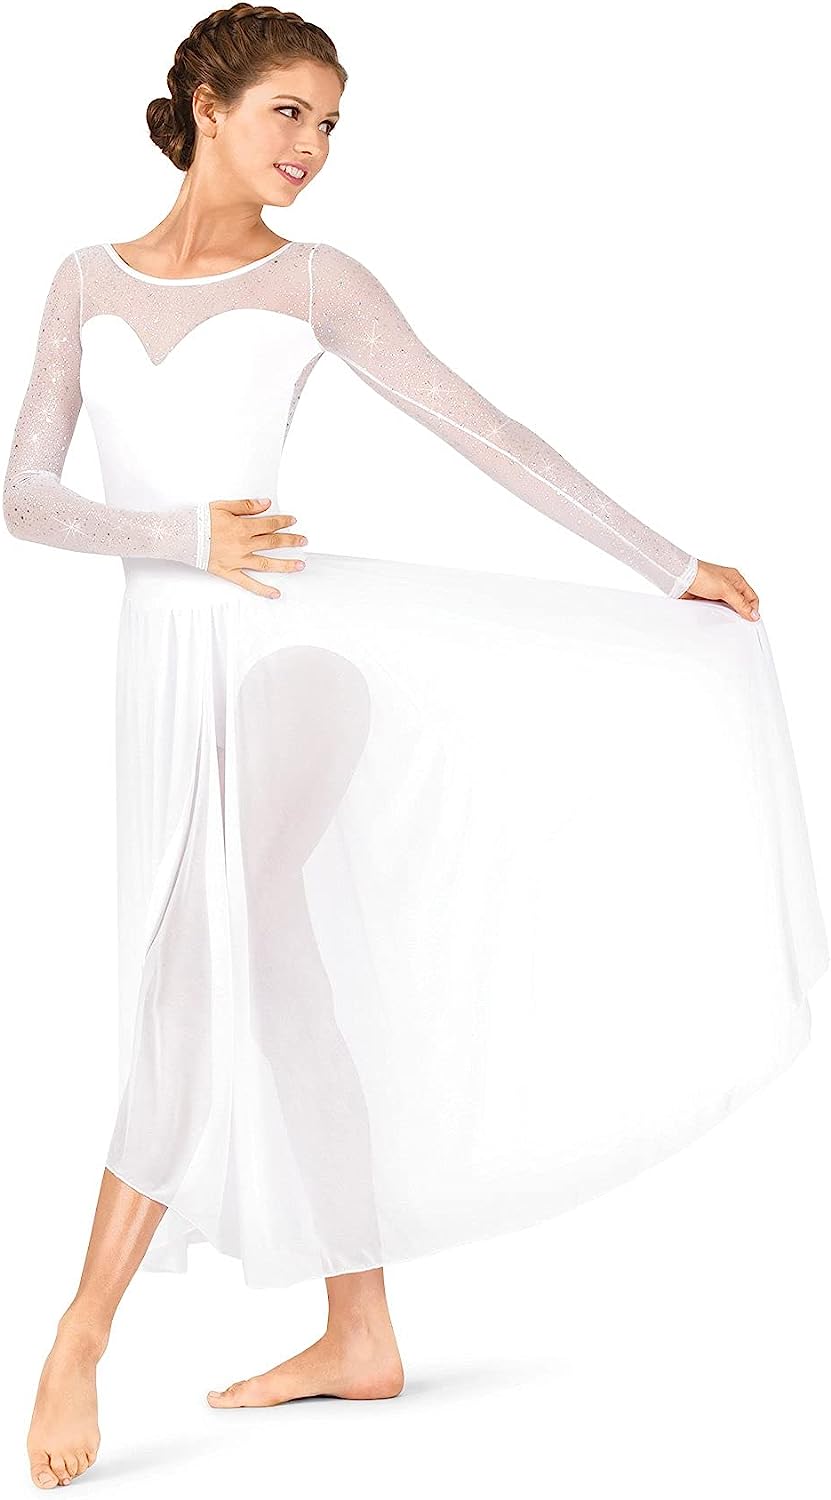 Womens Performance Twinkle Mesh Long Sleeve Dress,TW617NUDM,Nude,Medium